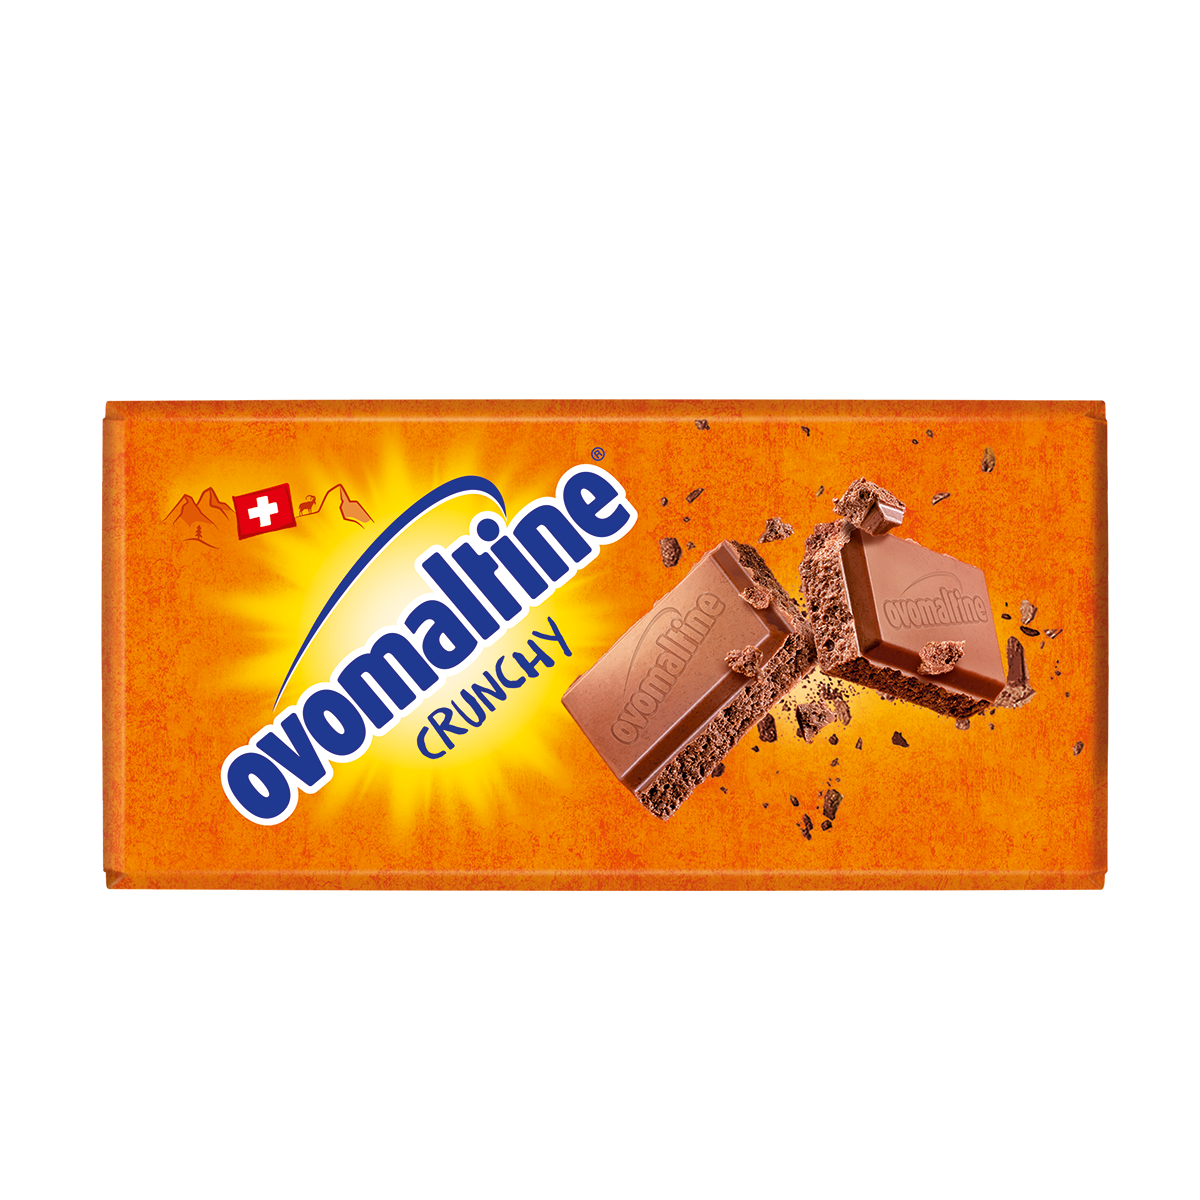  Chocolat Ovomaltine - chocolat au lait Ovo